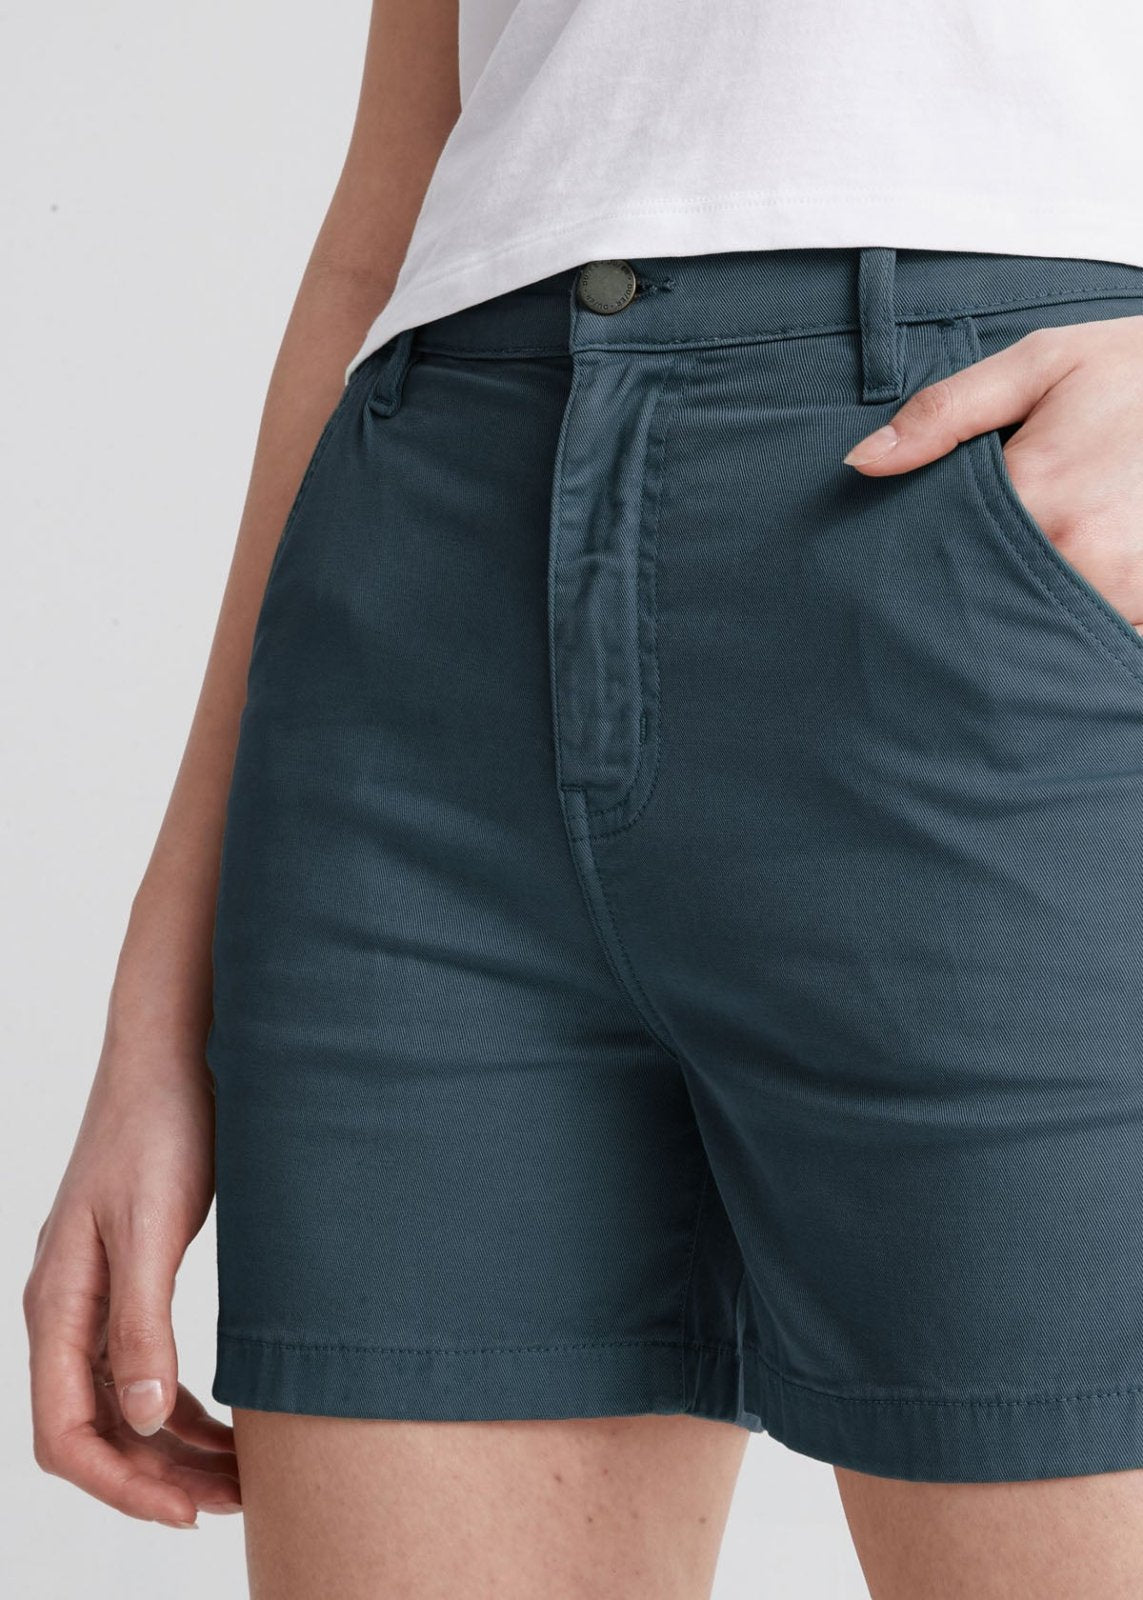 womens dark blue stretch utility shorts front waistband detail